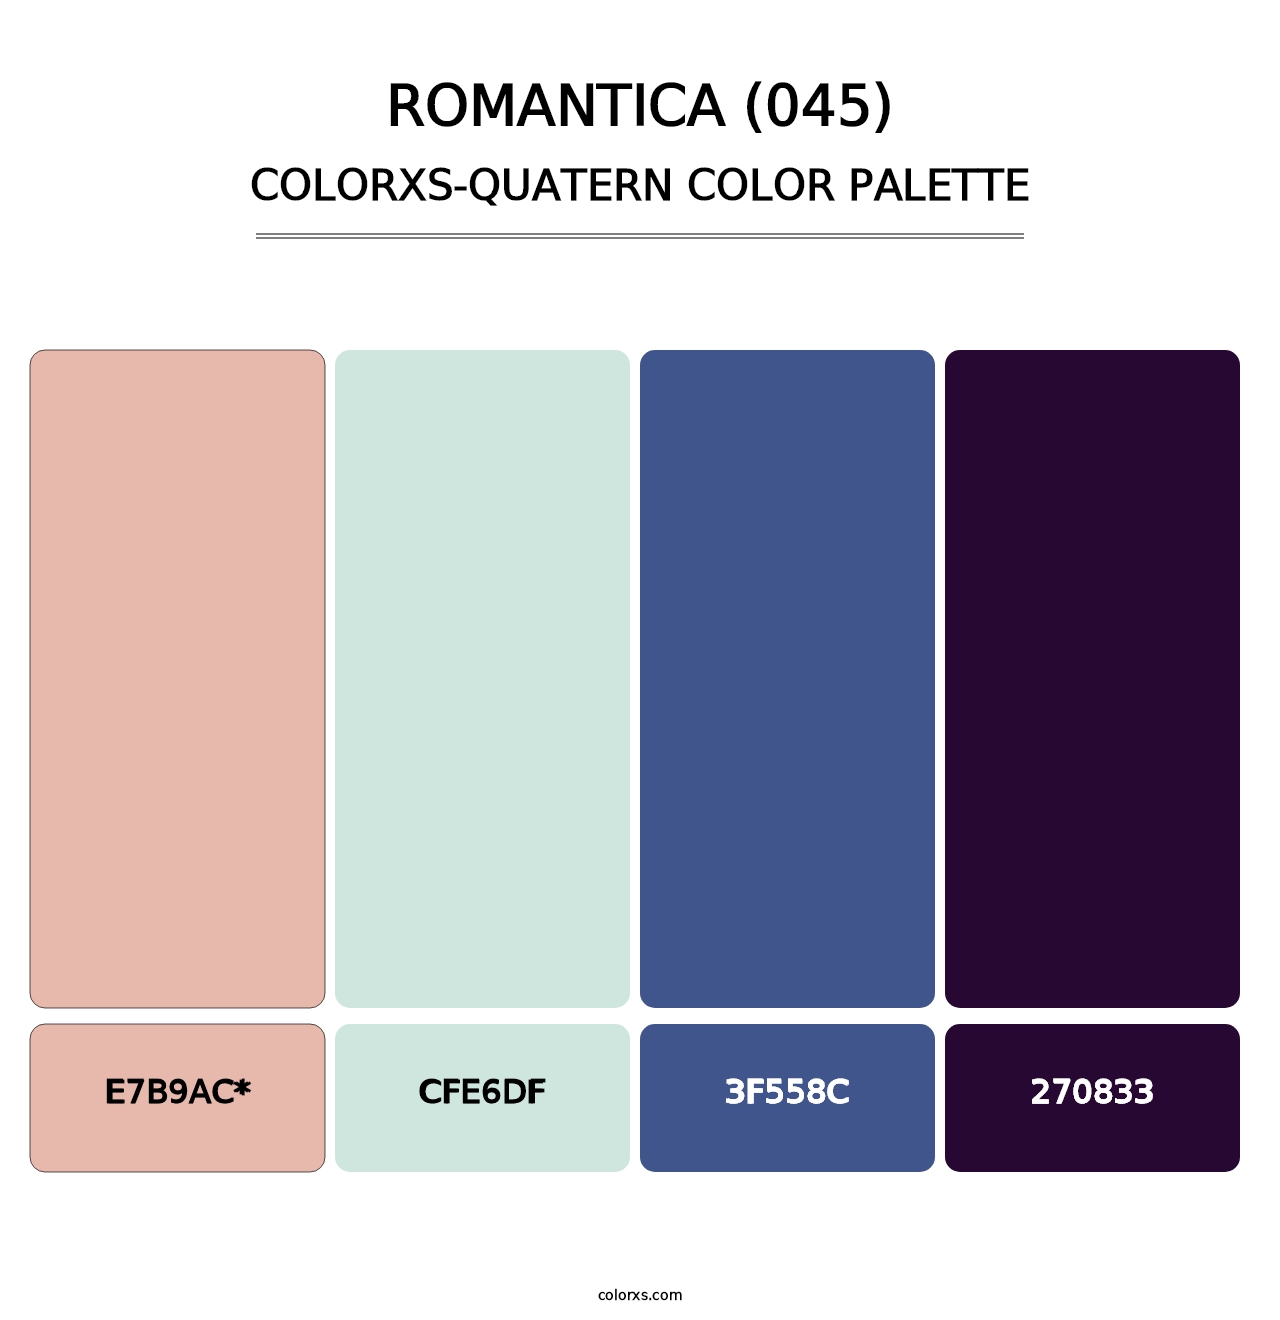 Romantica (045) - Colorxs Quatern Palette